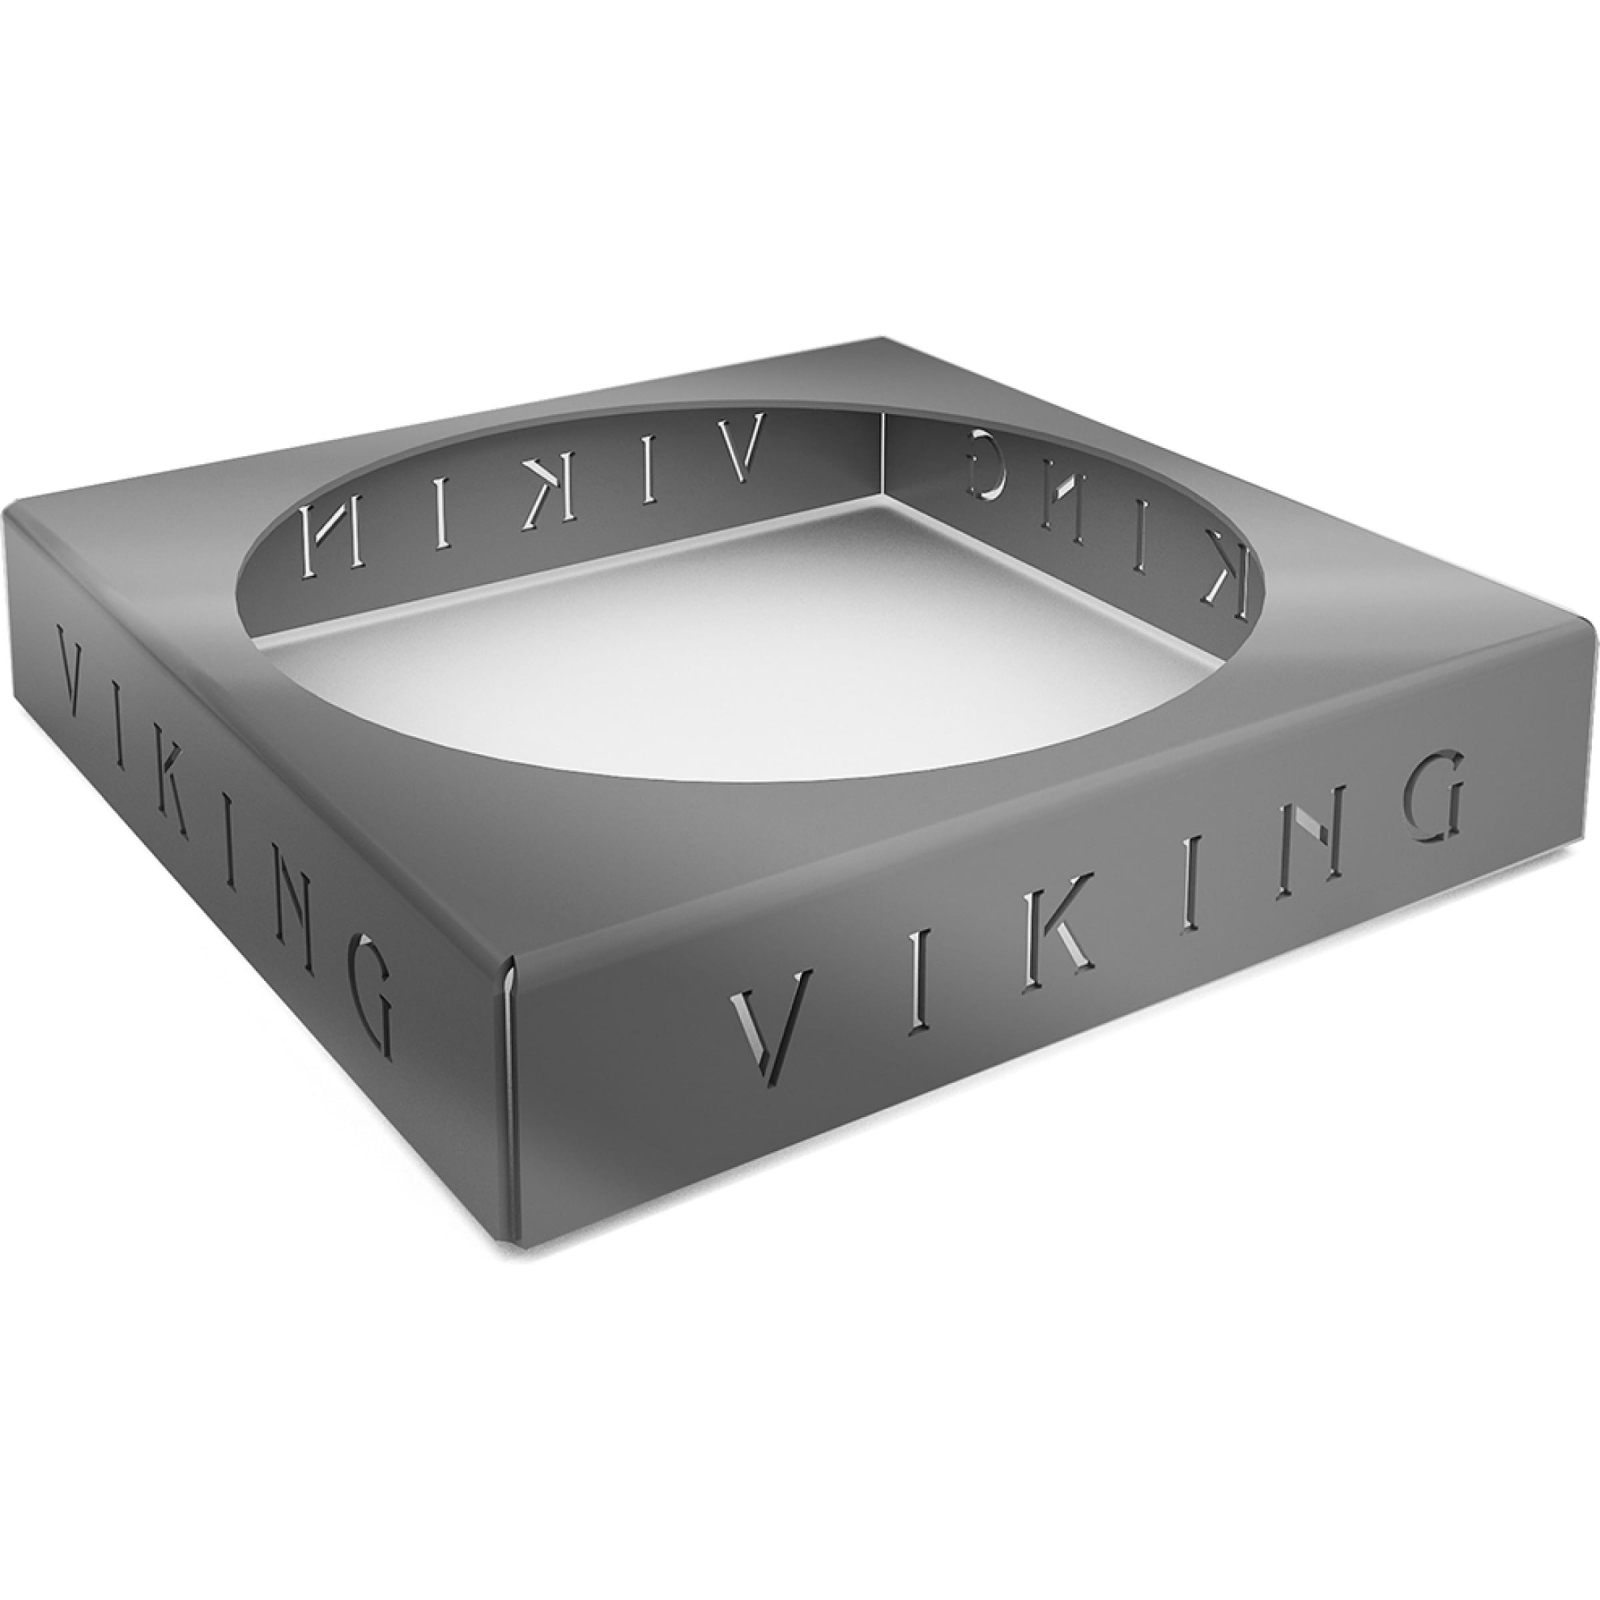 Подставка под казан Grillux для VikinG подставка под казан viking xl